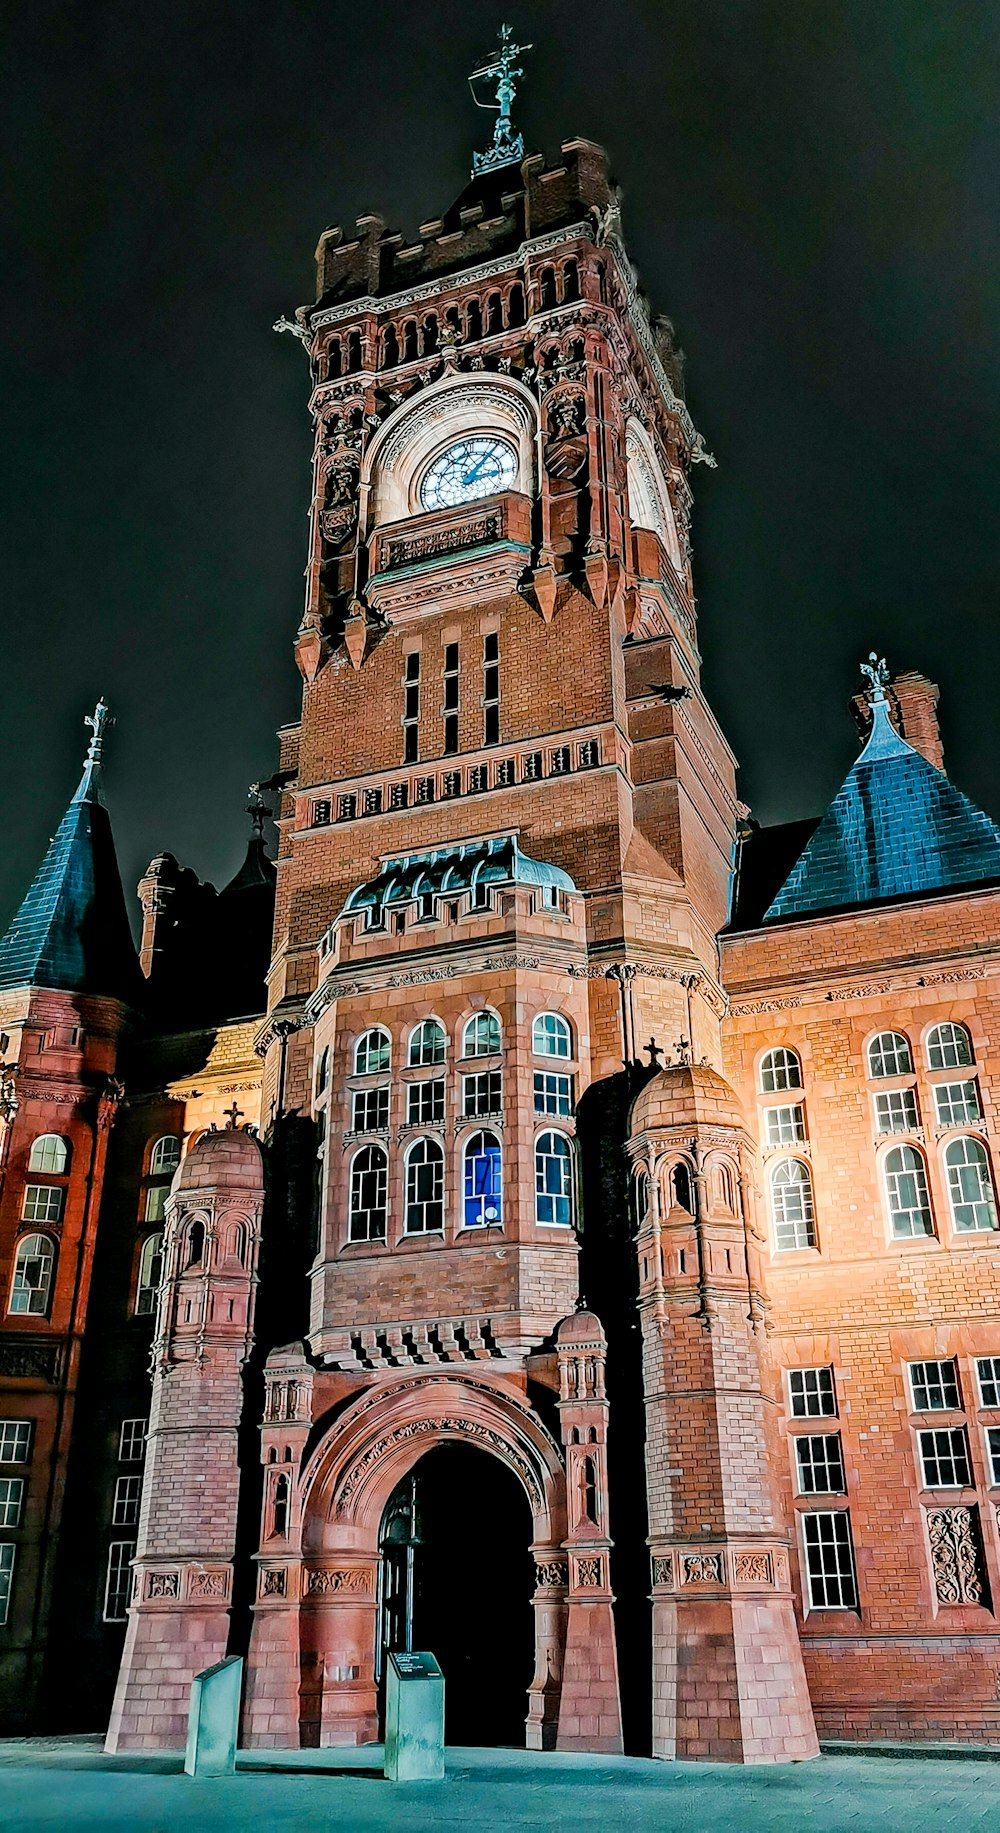 brown tower clock at night